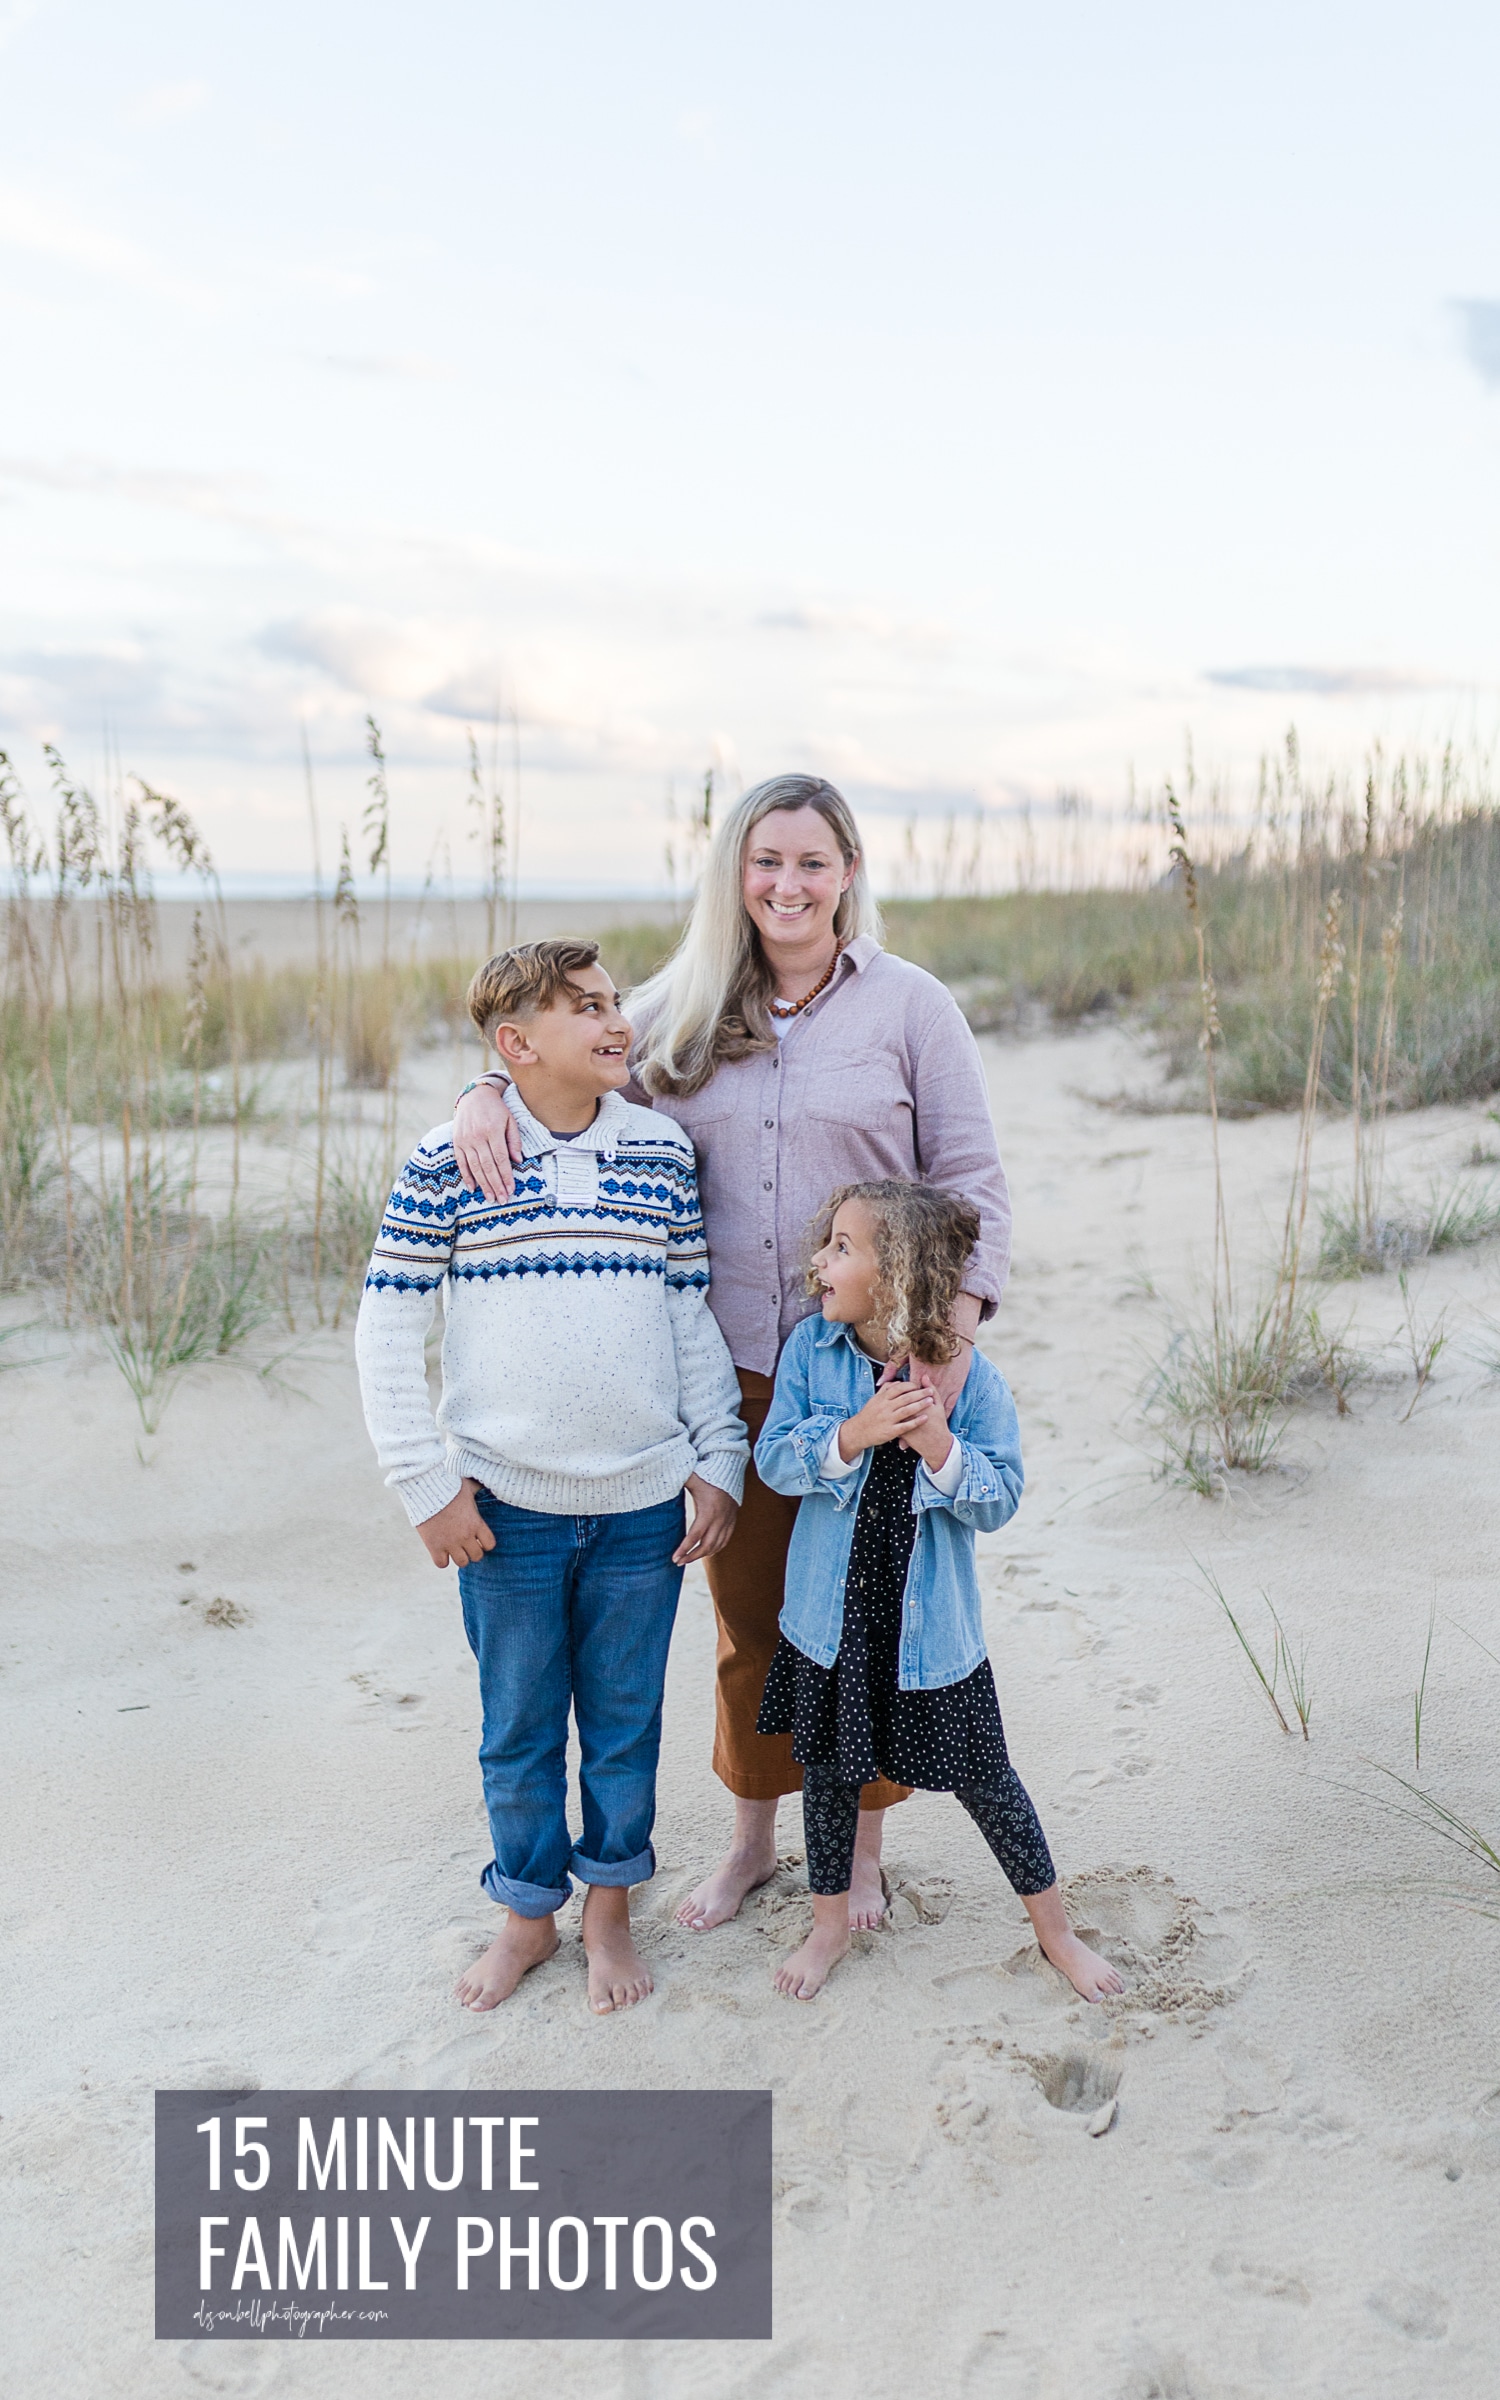 Fast, fun family photographer in virginia Beach. Alison Bell, Photographer